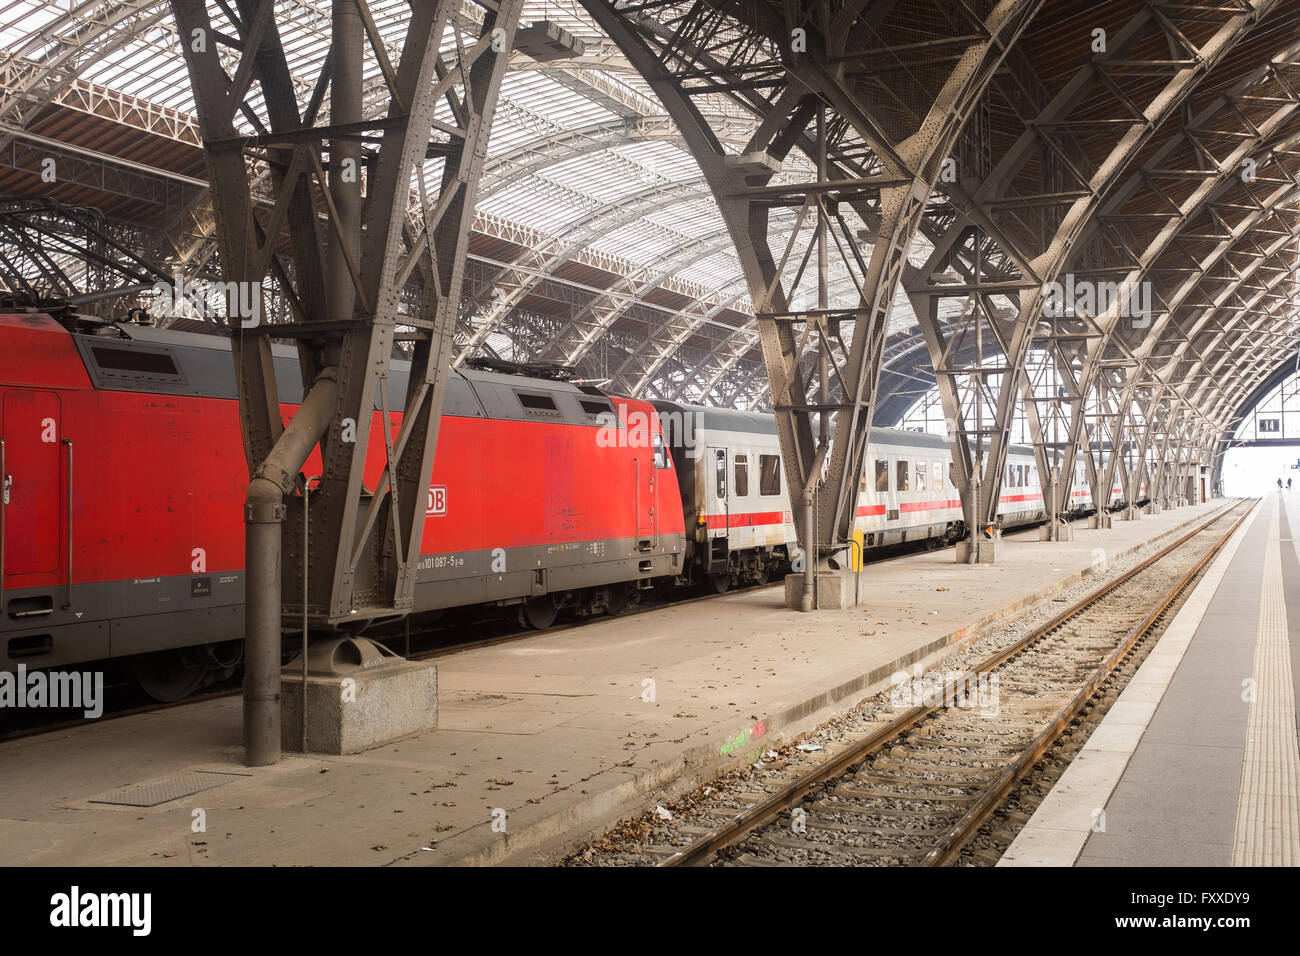 LEIPZIG, 5 APRIL: ein Regionalzug im Hauptbahnhof in Leipzig am 5. April 2016. Stockfoto